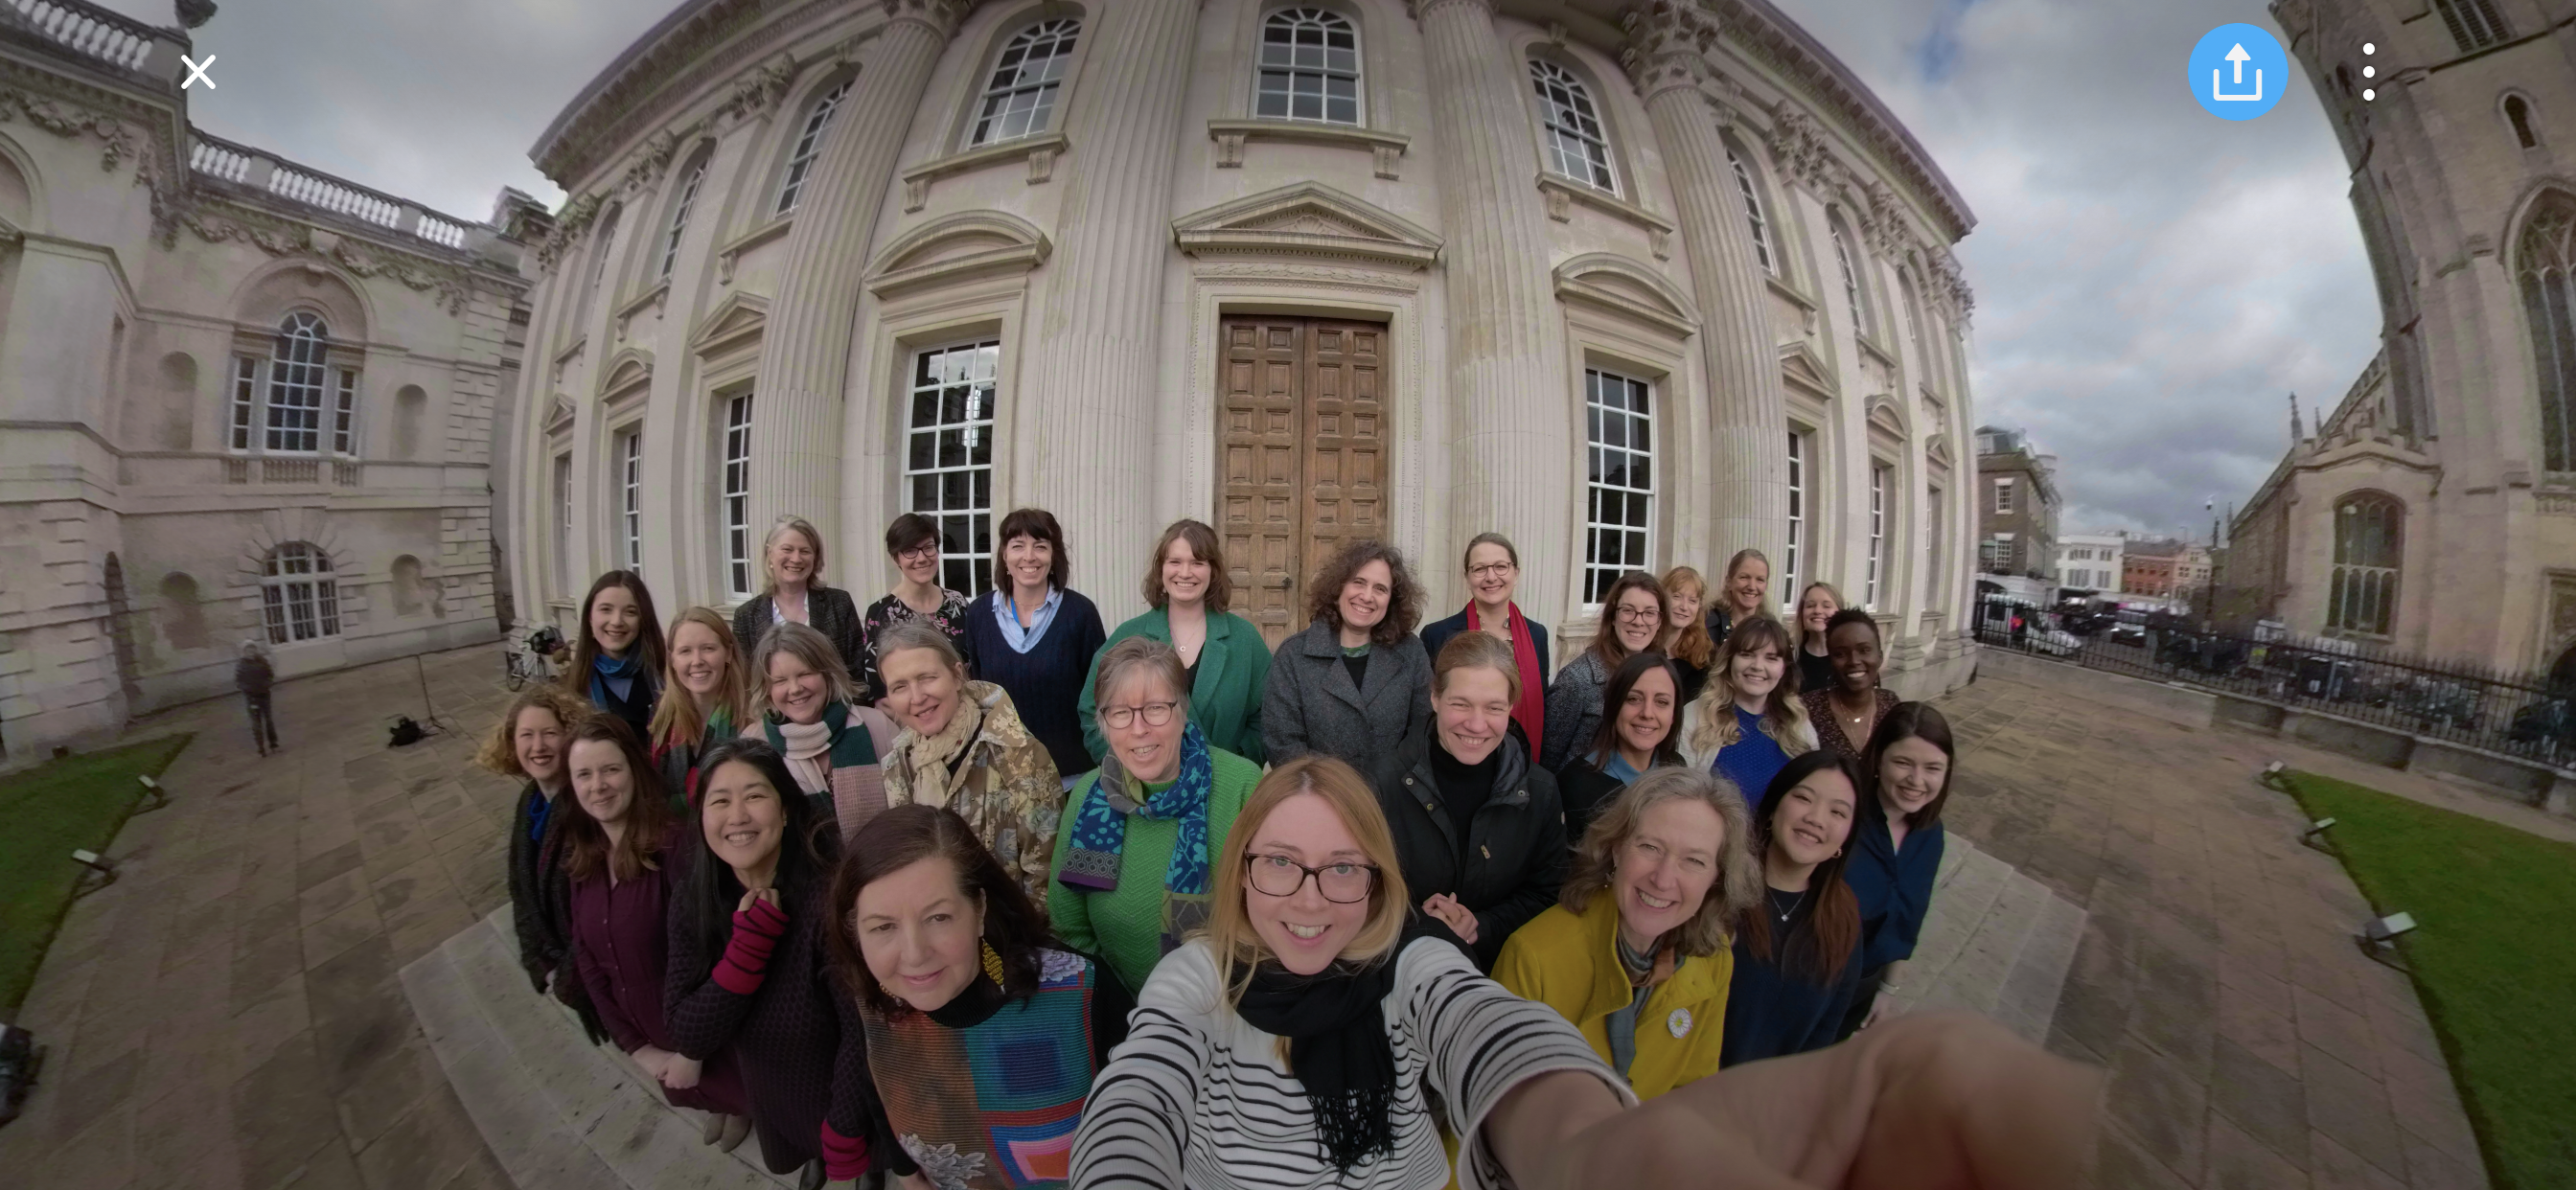 Women of Cambridge University gather on the steps of Senate House